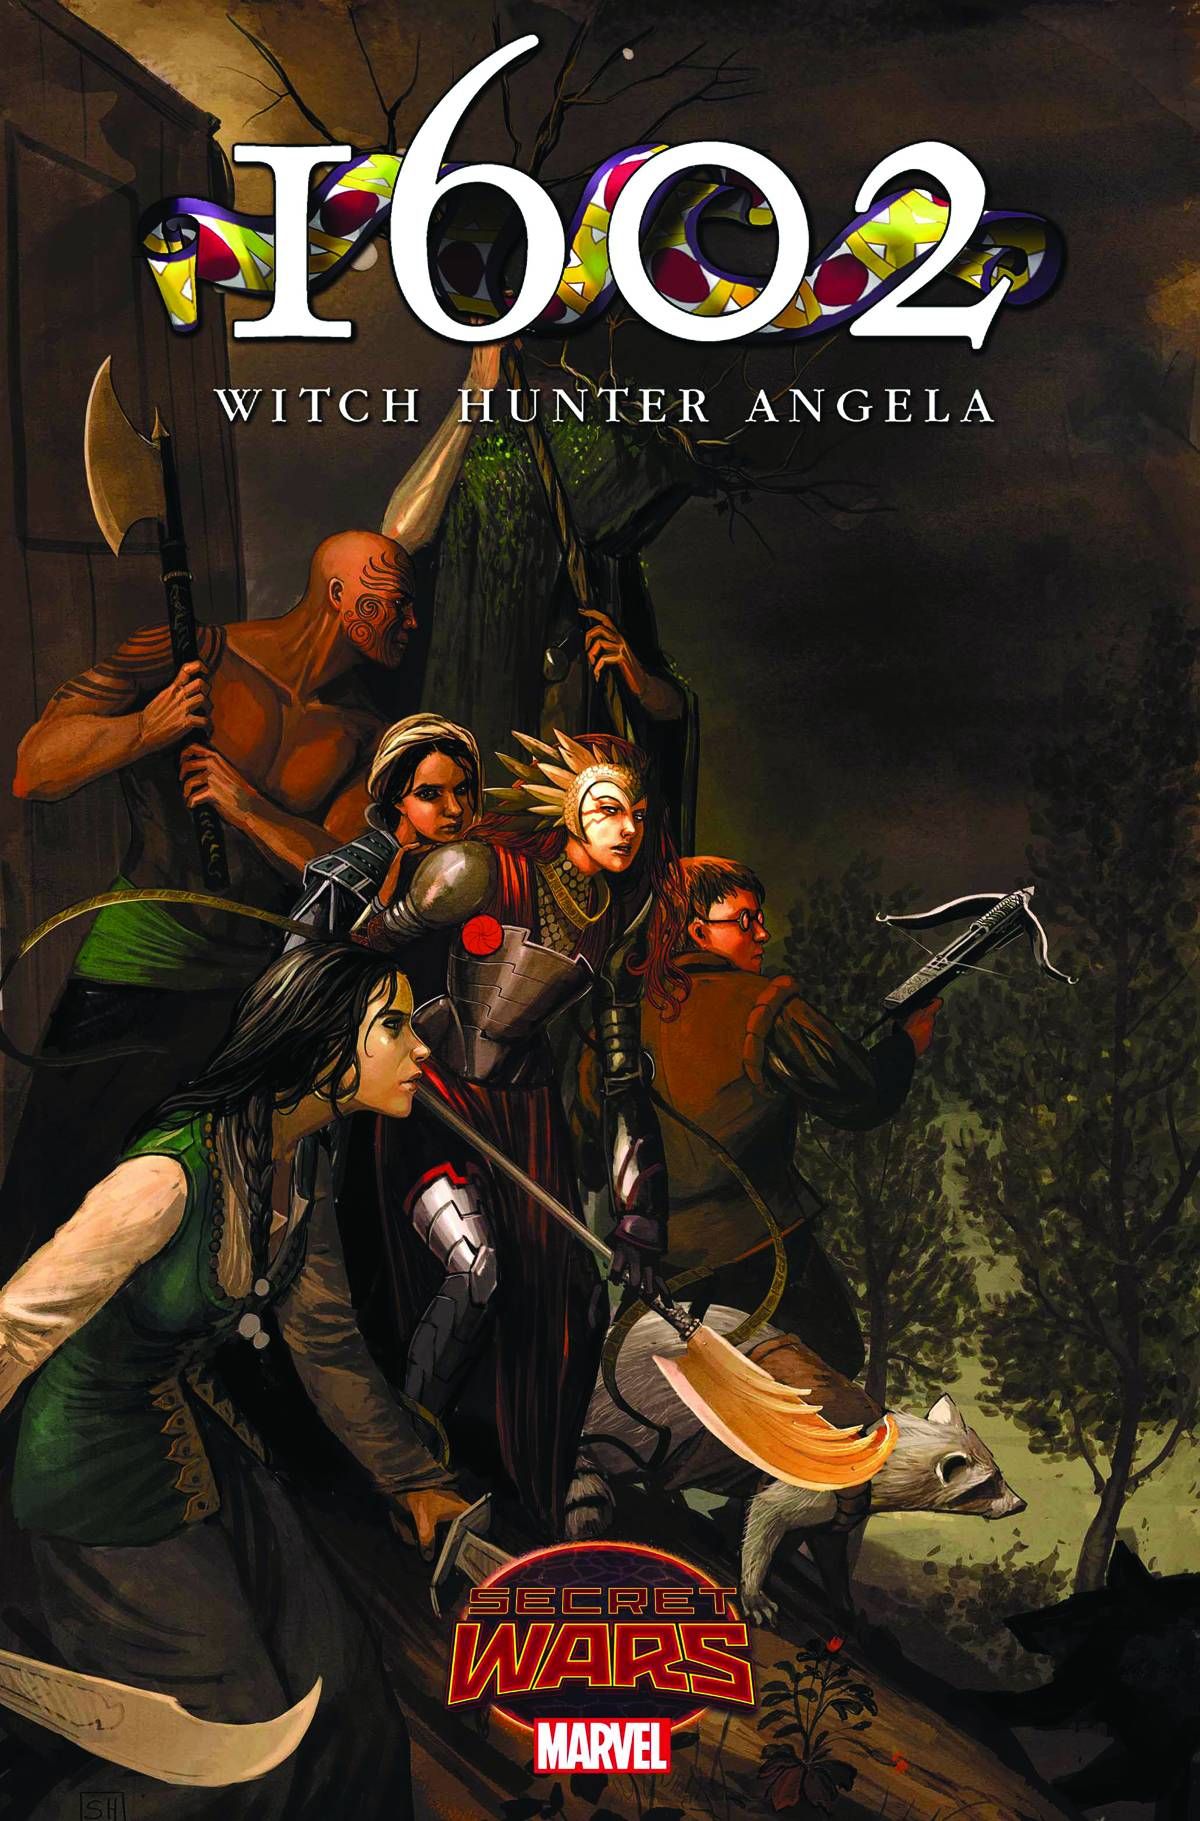 1602 Witch Hunter Angela #2 Comic